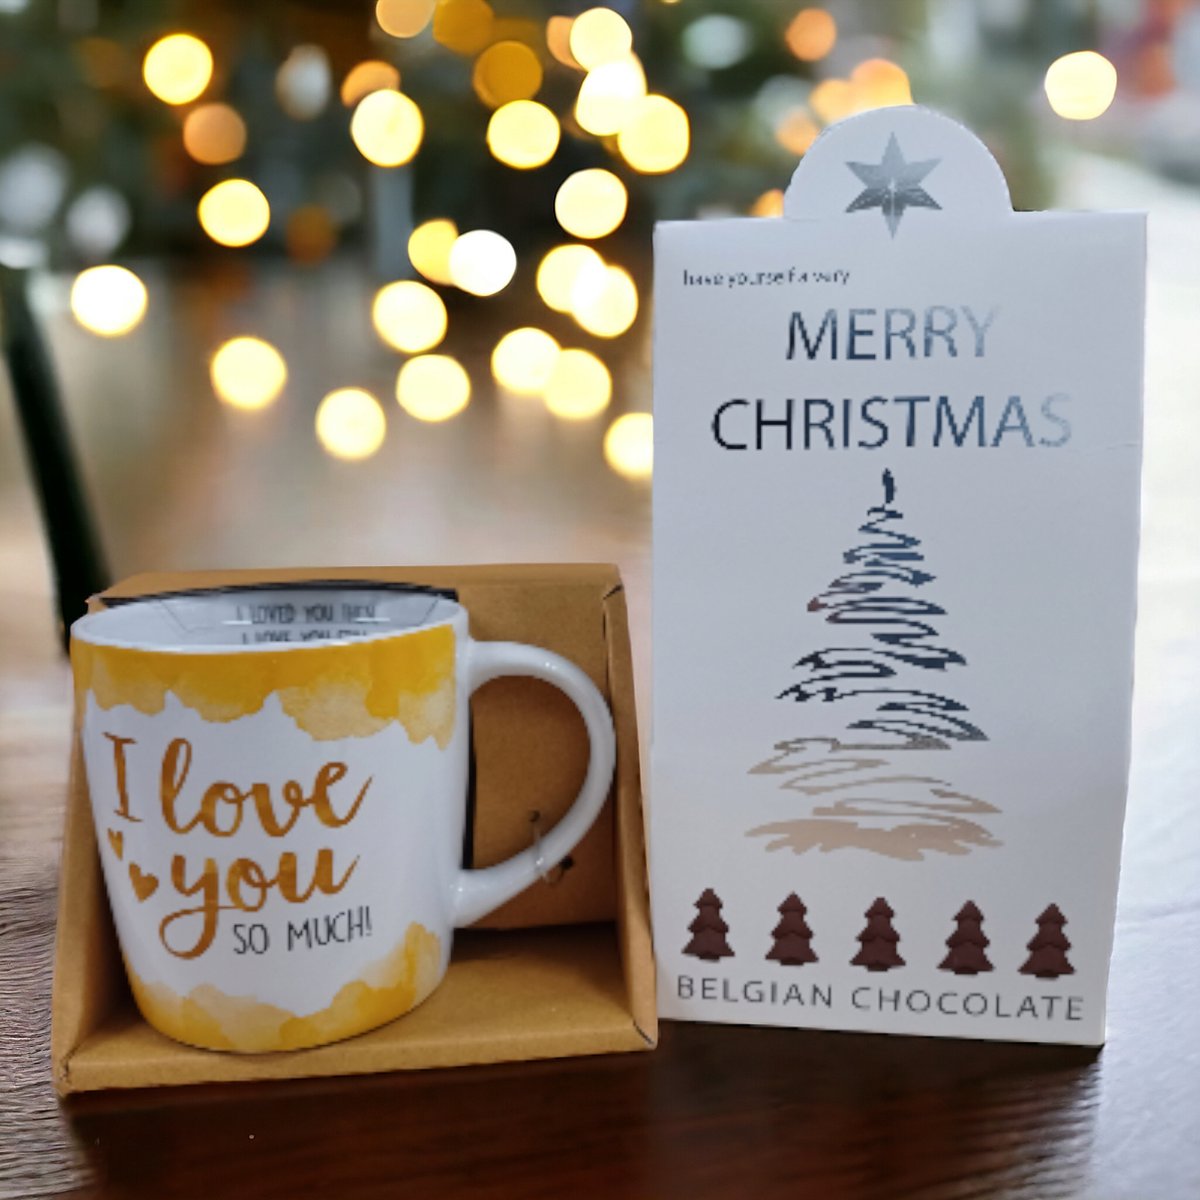 I love you-Ik hou van jou-So much-Kerstcadeau-Kerstpakket-Giftset-December Cadeau-Merry Christmas-Happy New Year-Belgische Chocolade-Champagne Flesjes-Kerst Chocolade-Zoetigheid-Mok-Beker-Magische dagen-Familiediner-Kerstdiner-Kerstfeest-Oudejaar